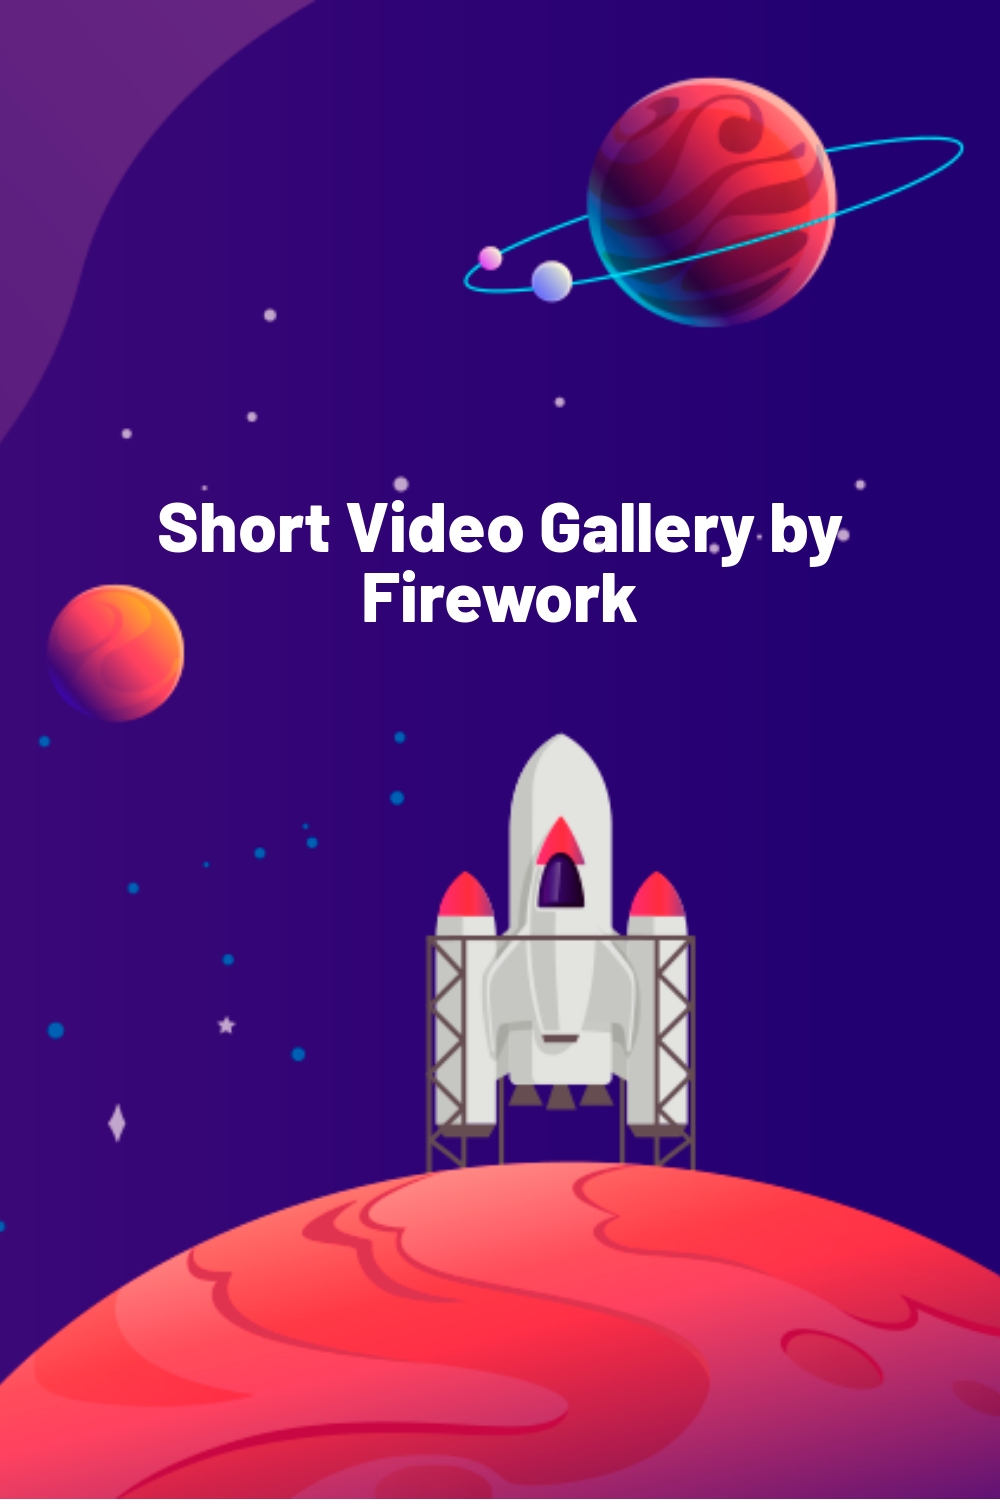 Short Video Gallery by Firework